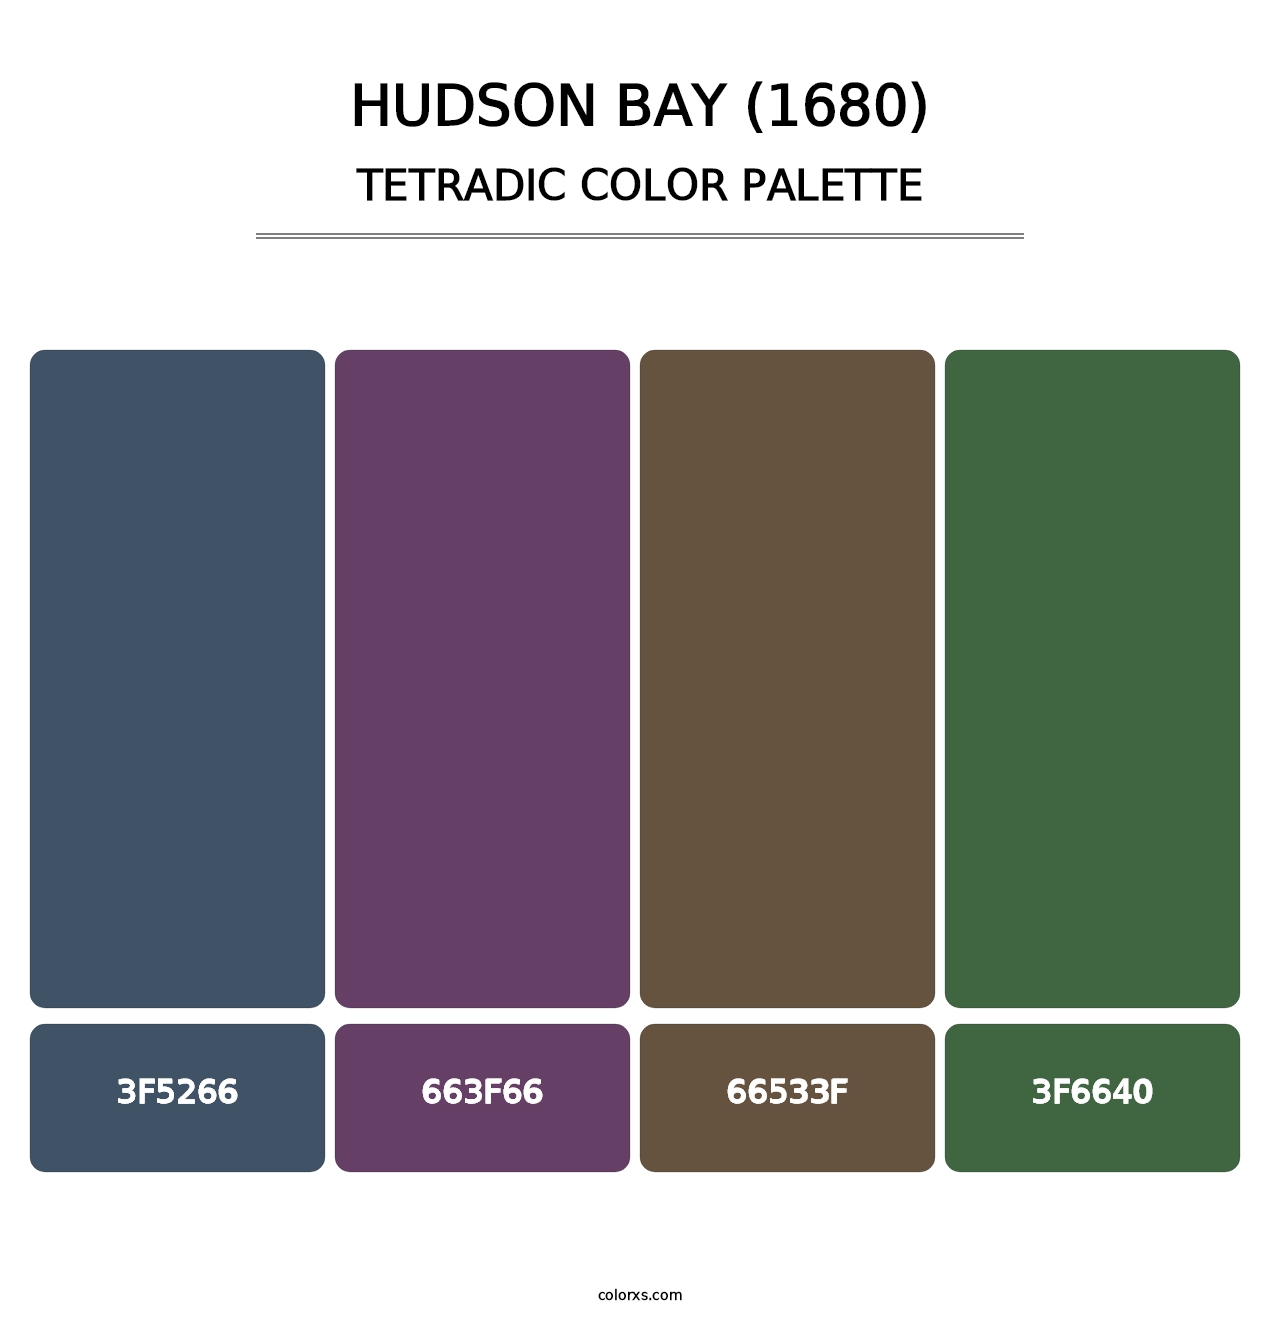 Hudson Bay (1680) - Tetradic Color Palette